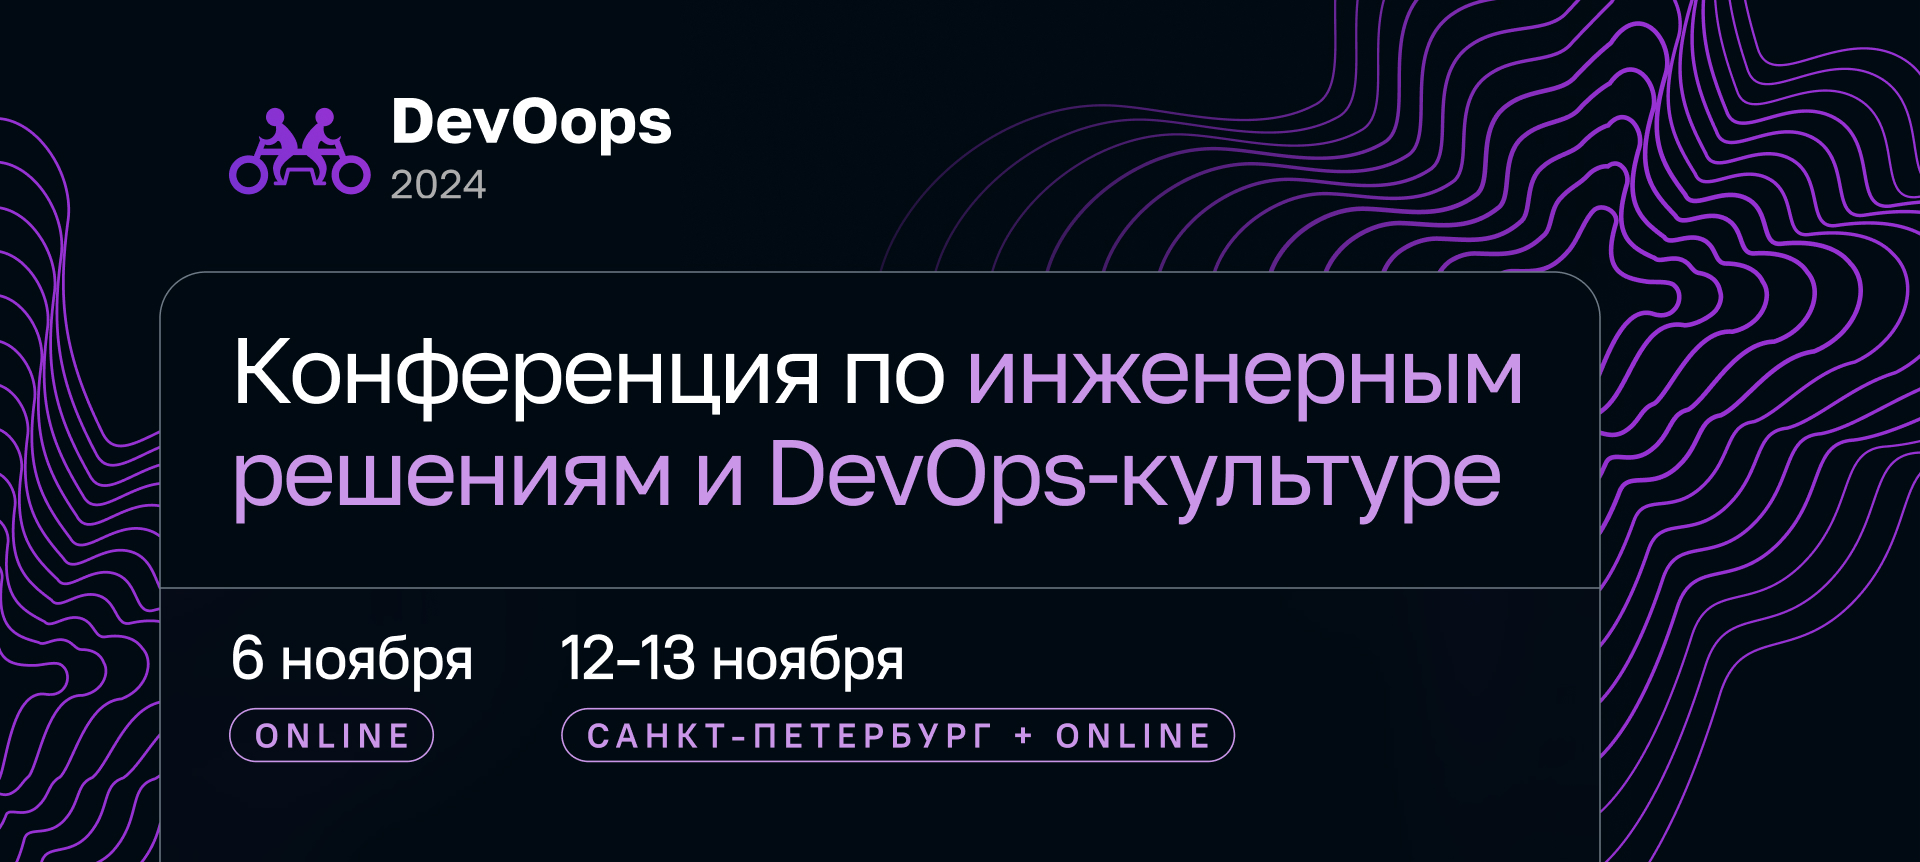 Обложка мероприятия DevOops 2024 Online